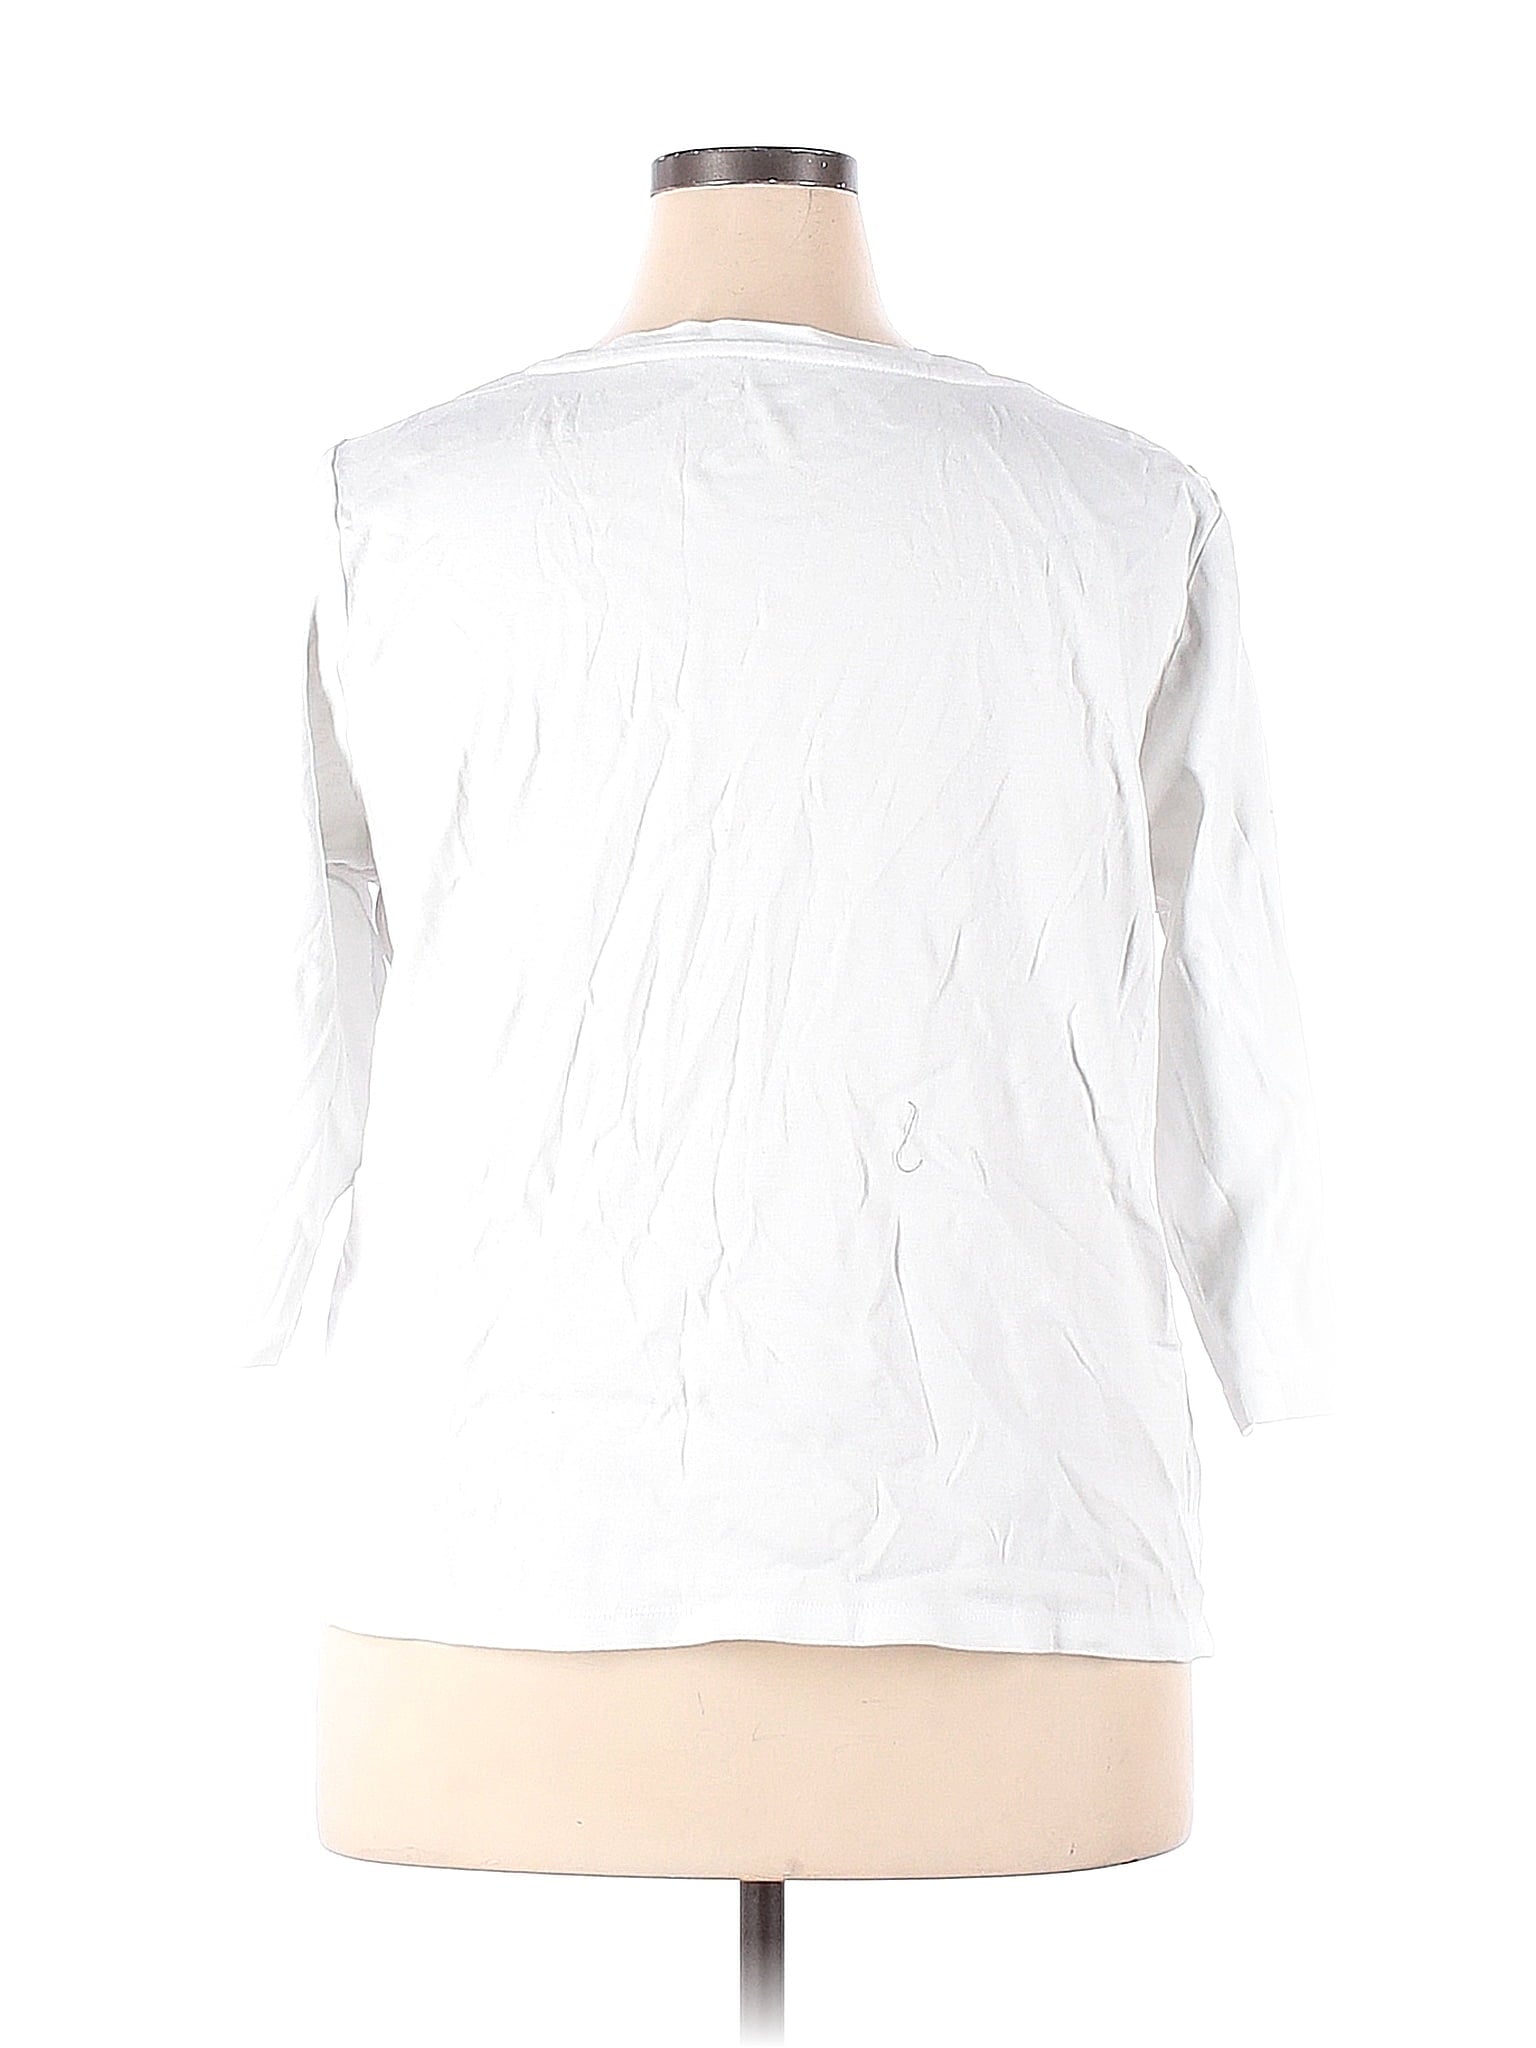 3/4 Sleeve T Shirt size - 2X W